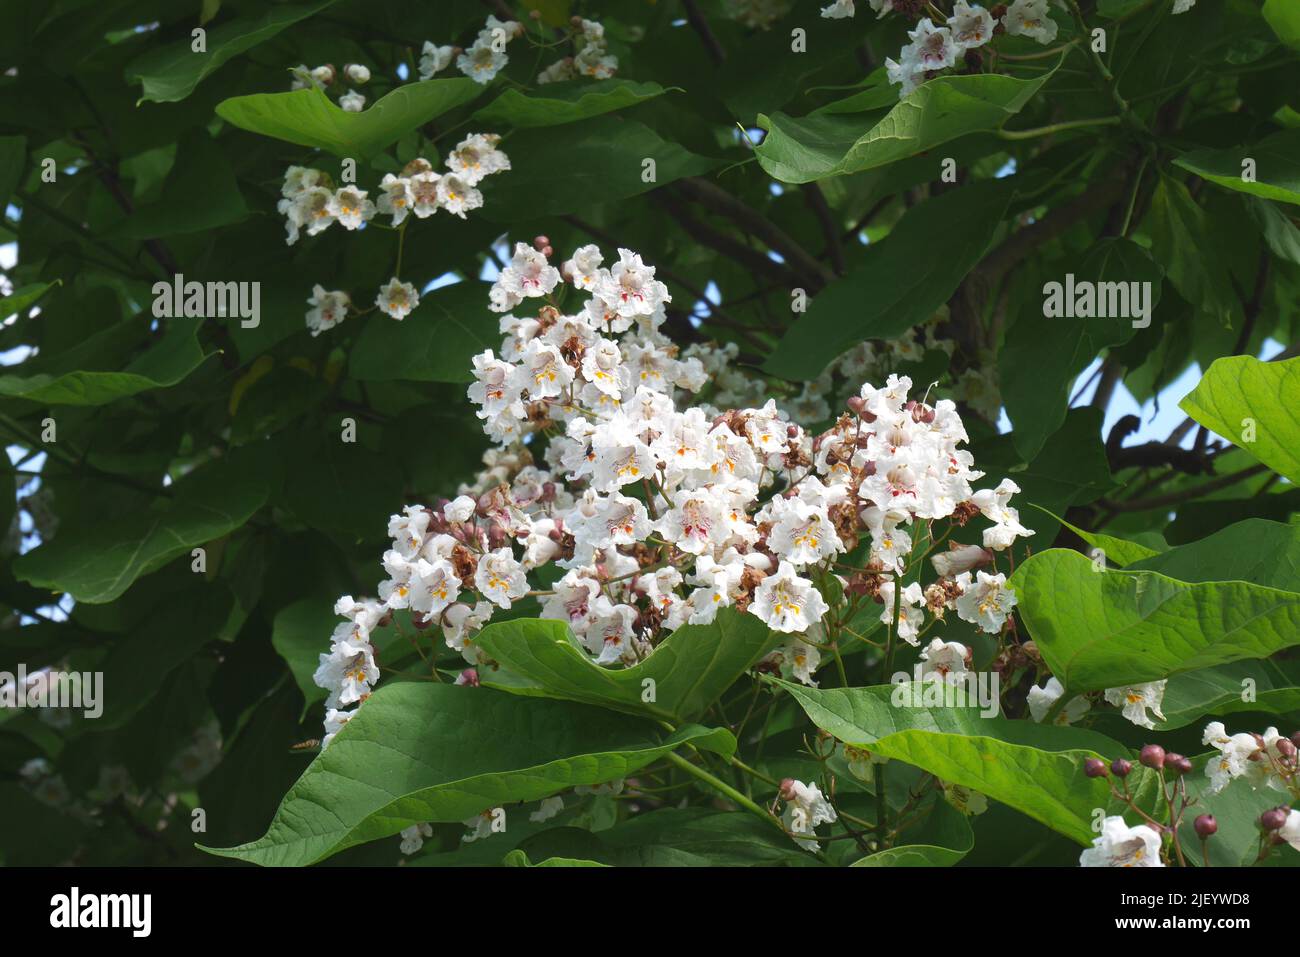 Catalpa tree in flower in a garden, Hungary Stock Photo